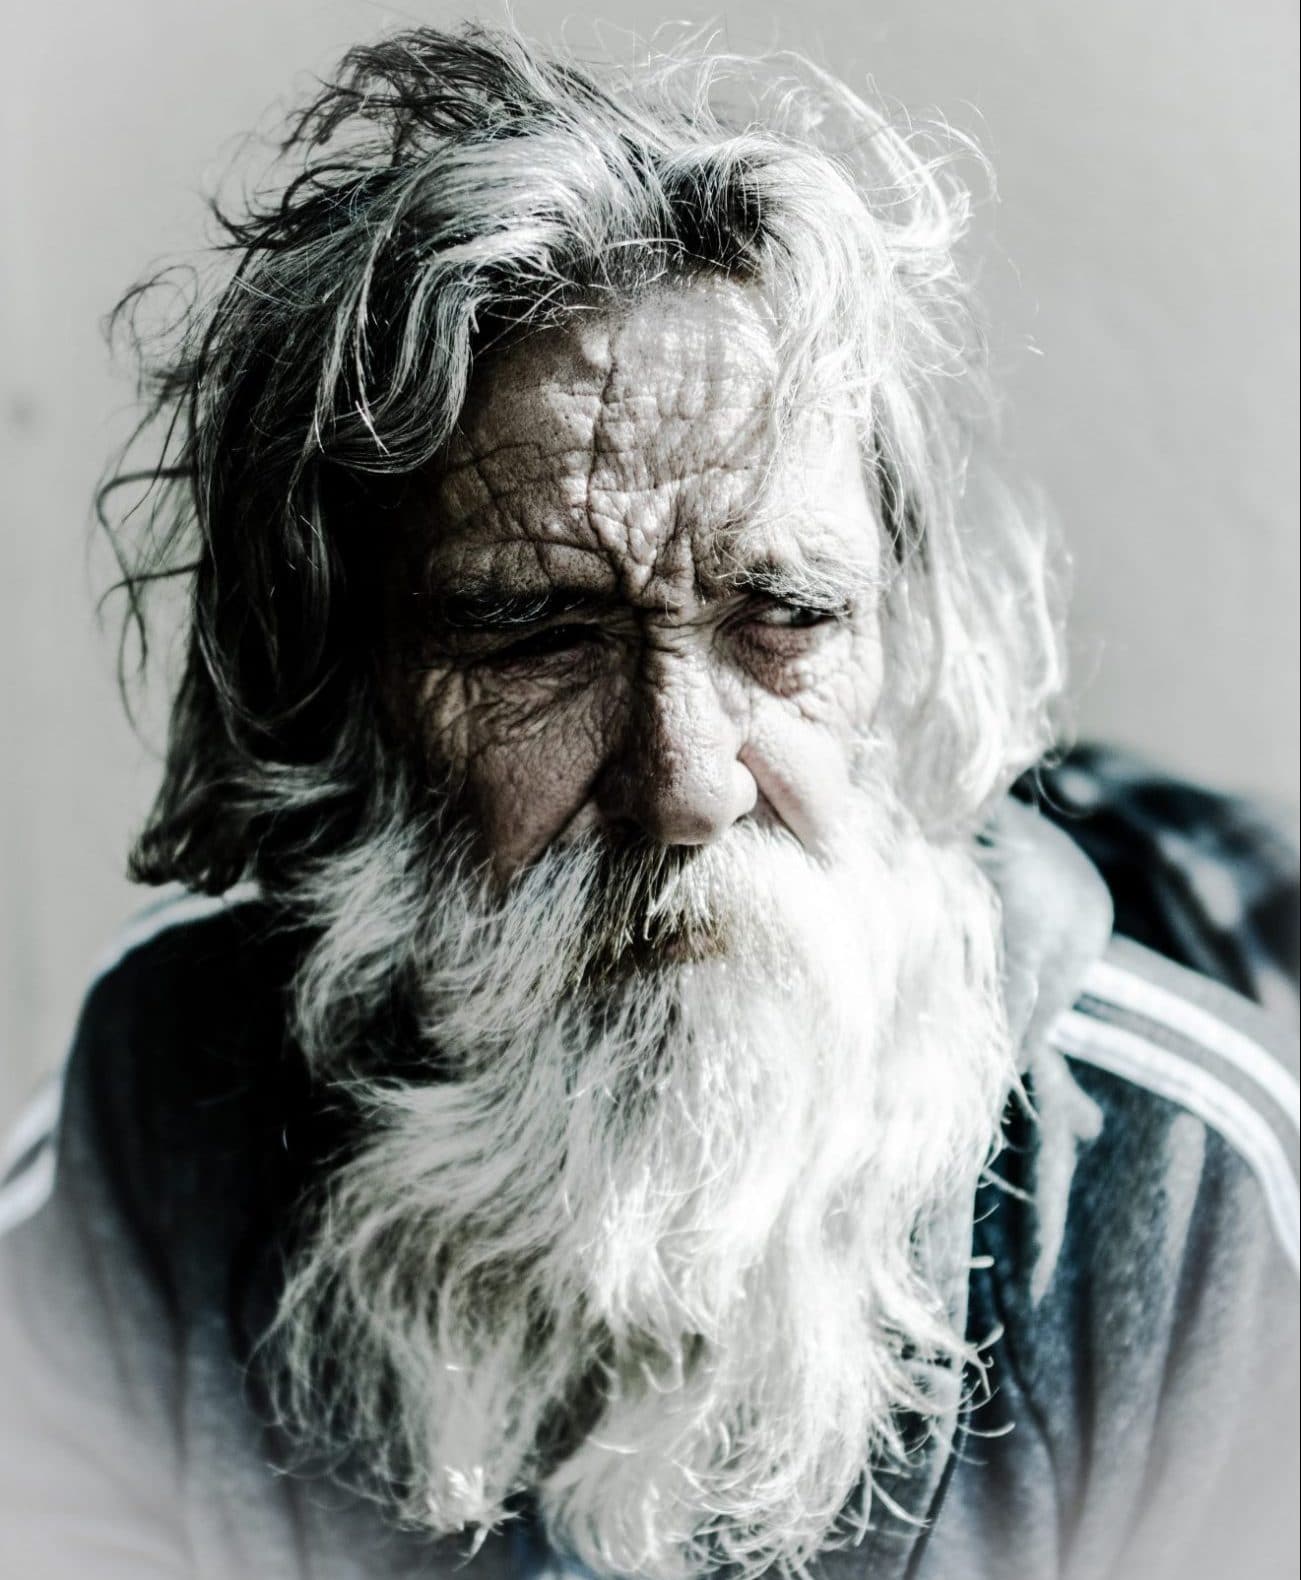 An old man who looks like Pythagoras